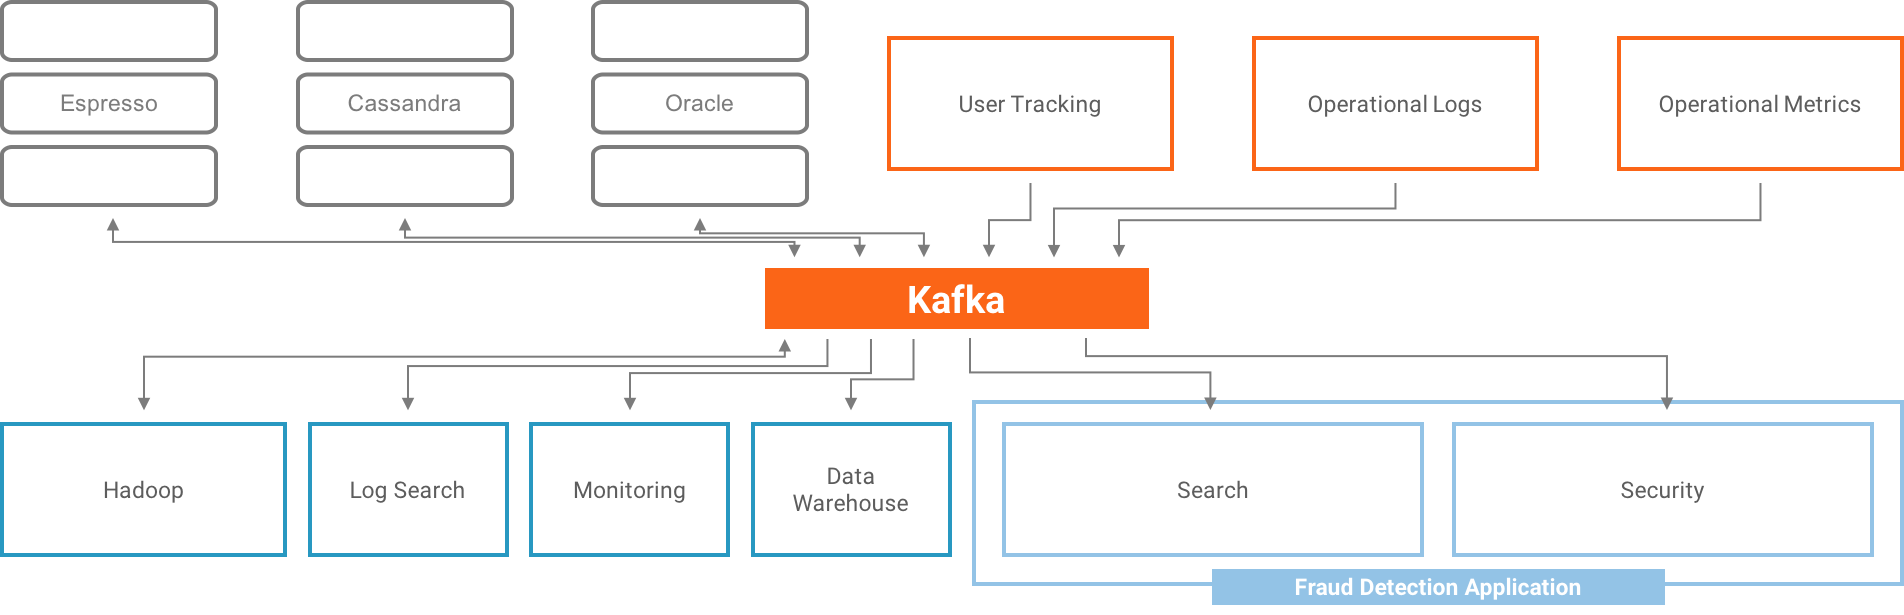 Kafka bootstrap servers. Kafka Star Rail. Kafka Ultimate. Operational metrics. AWS Glue Kafka.